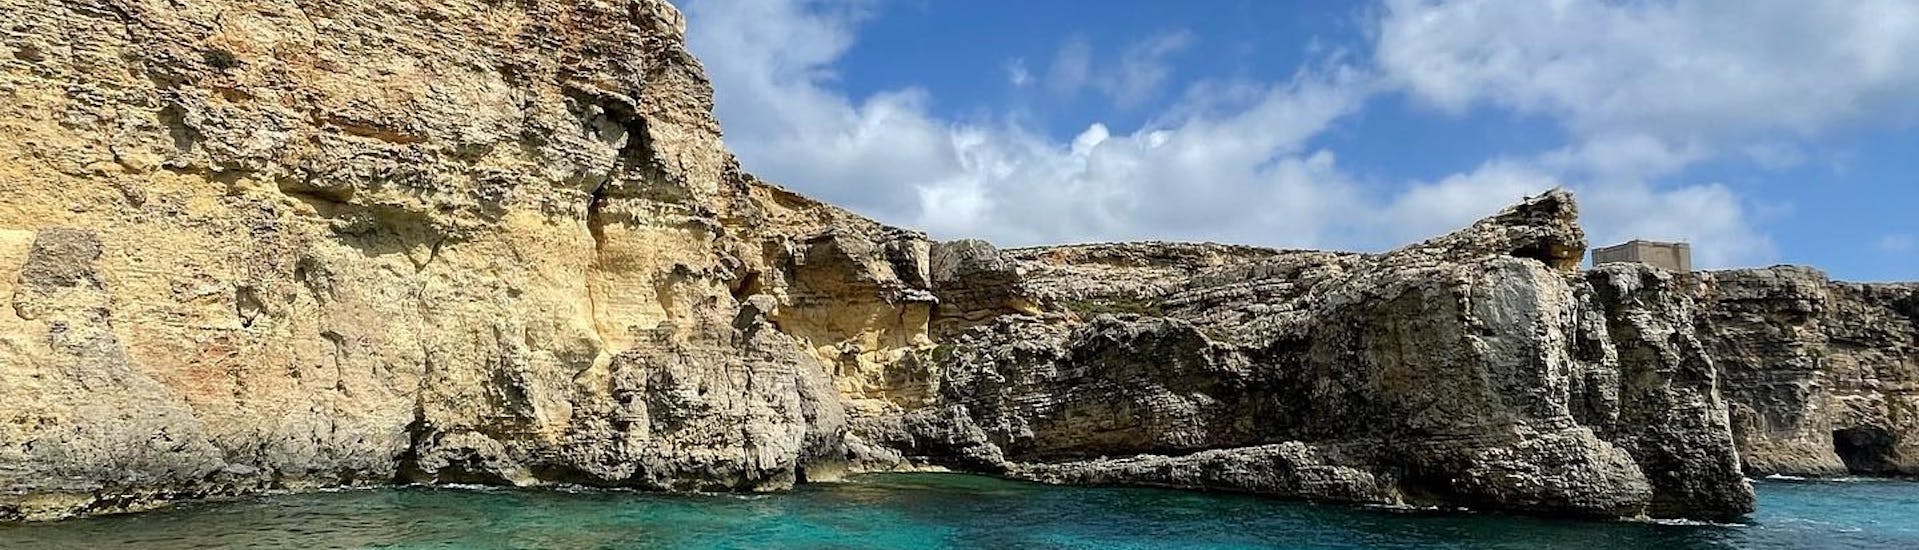 La côte lors de la Balade en bateau aux grottes de Comino & Lagon Bleu avec Baignade et Snorkeling avec Oh Yeah Malta.